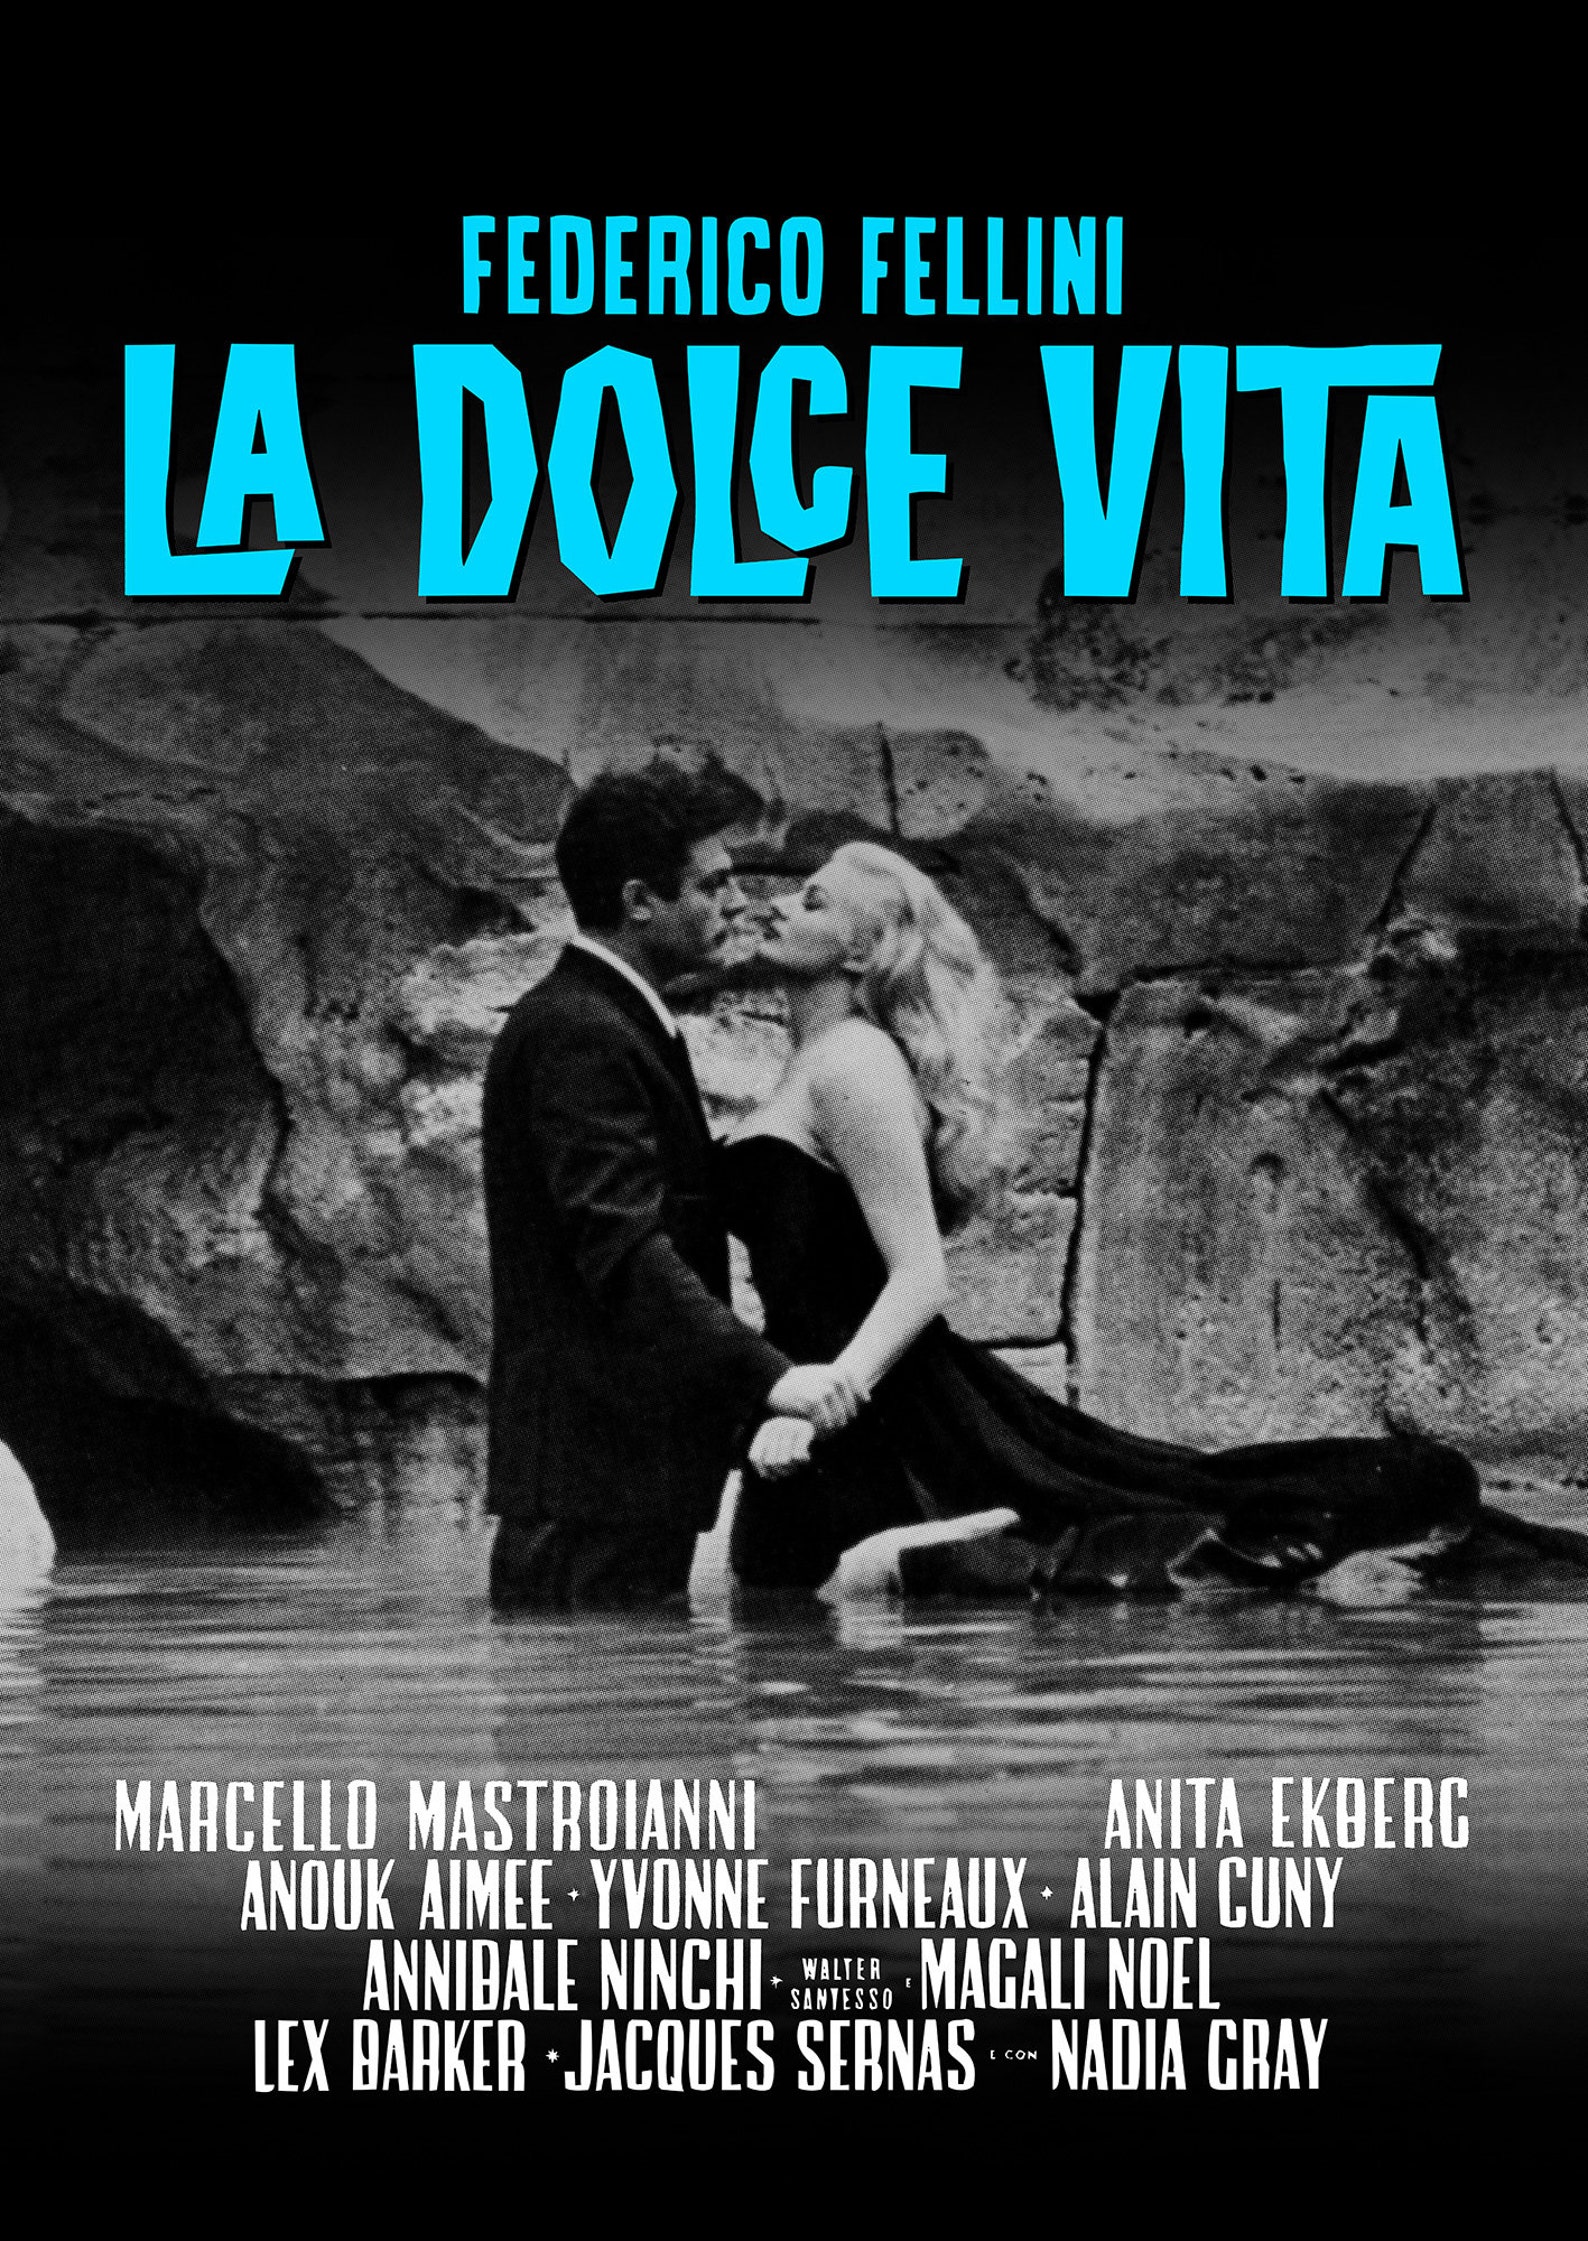 La Dolce Vita 1960 by Federico Fellini movie poster | Etsy